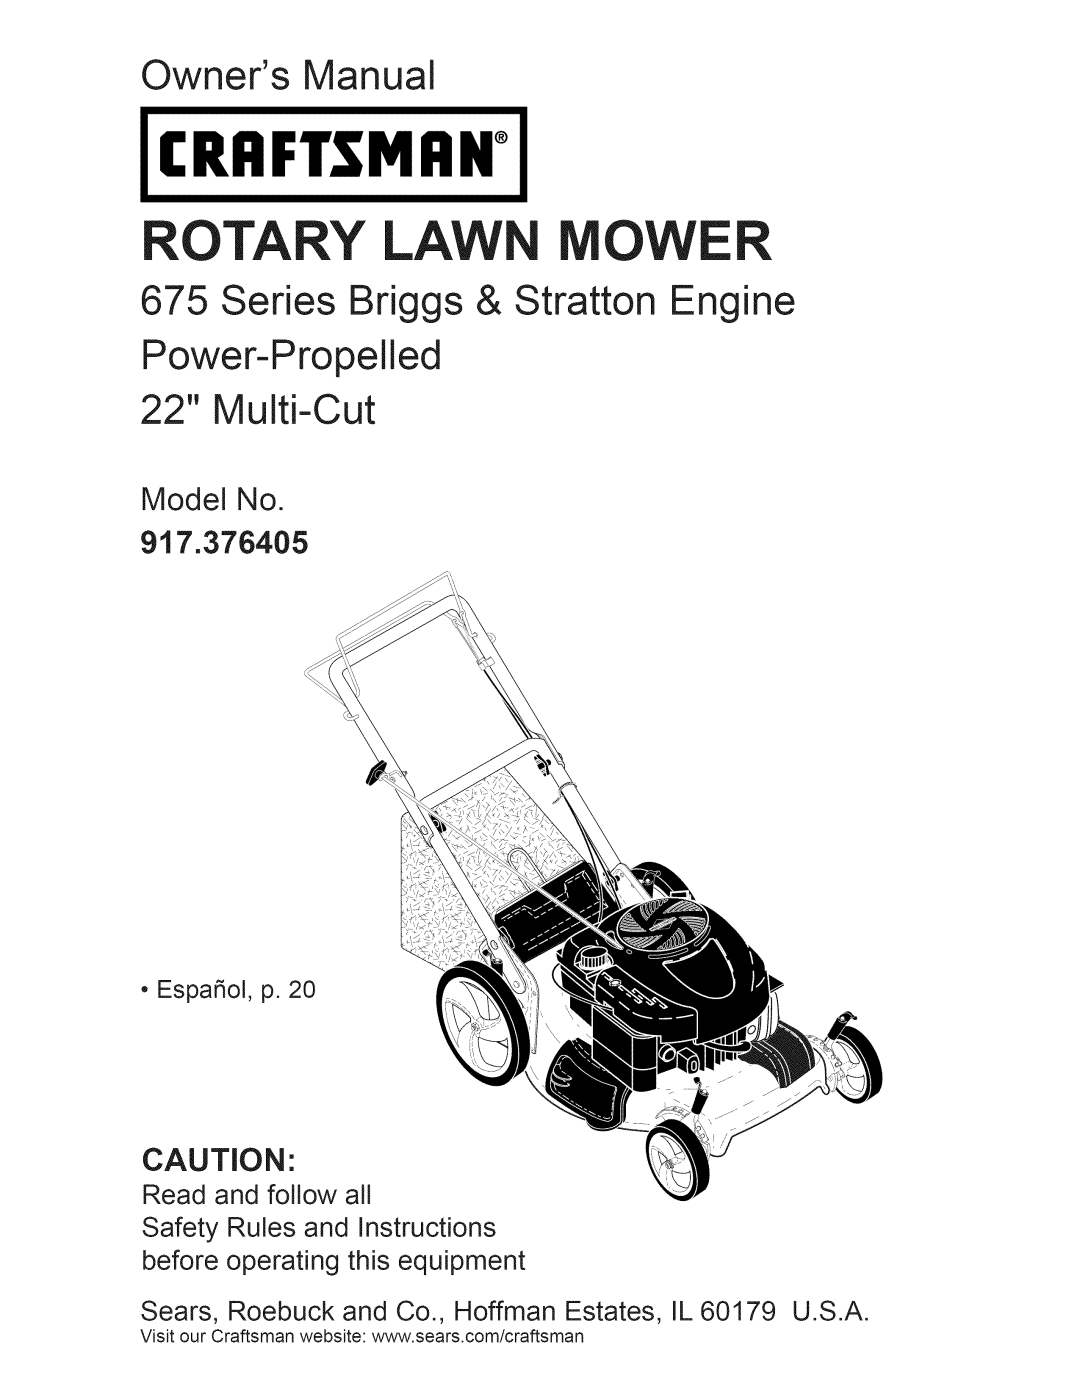 Craftsman owner manual Model No 917.376405, Craftsman, Rotary Lawn Mower, Owners Manual, Power-Propelled 22 Multi-Cut 